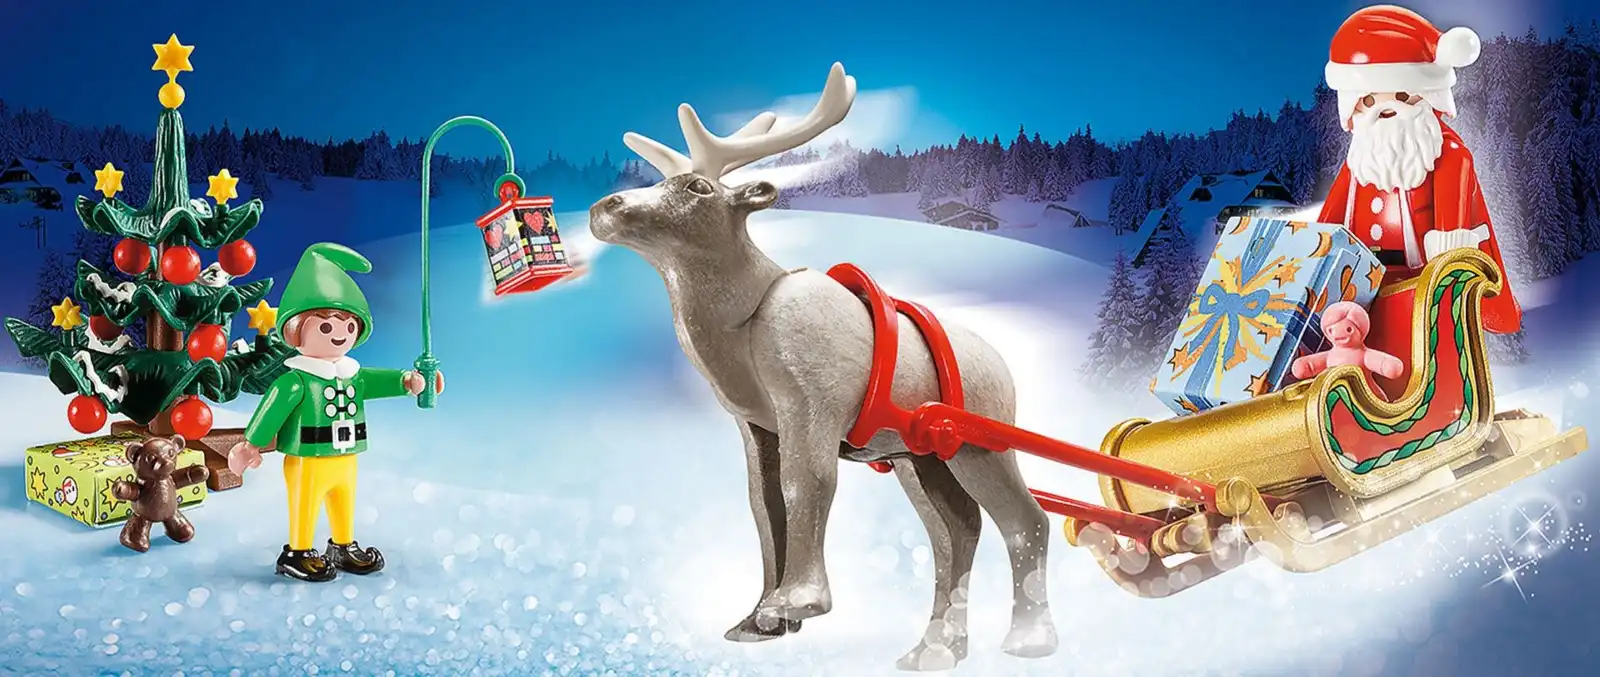 Playmobil Christmas / Weihnachten bei Spielzeugwelten.de